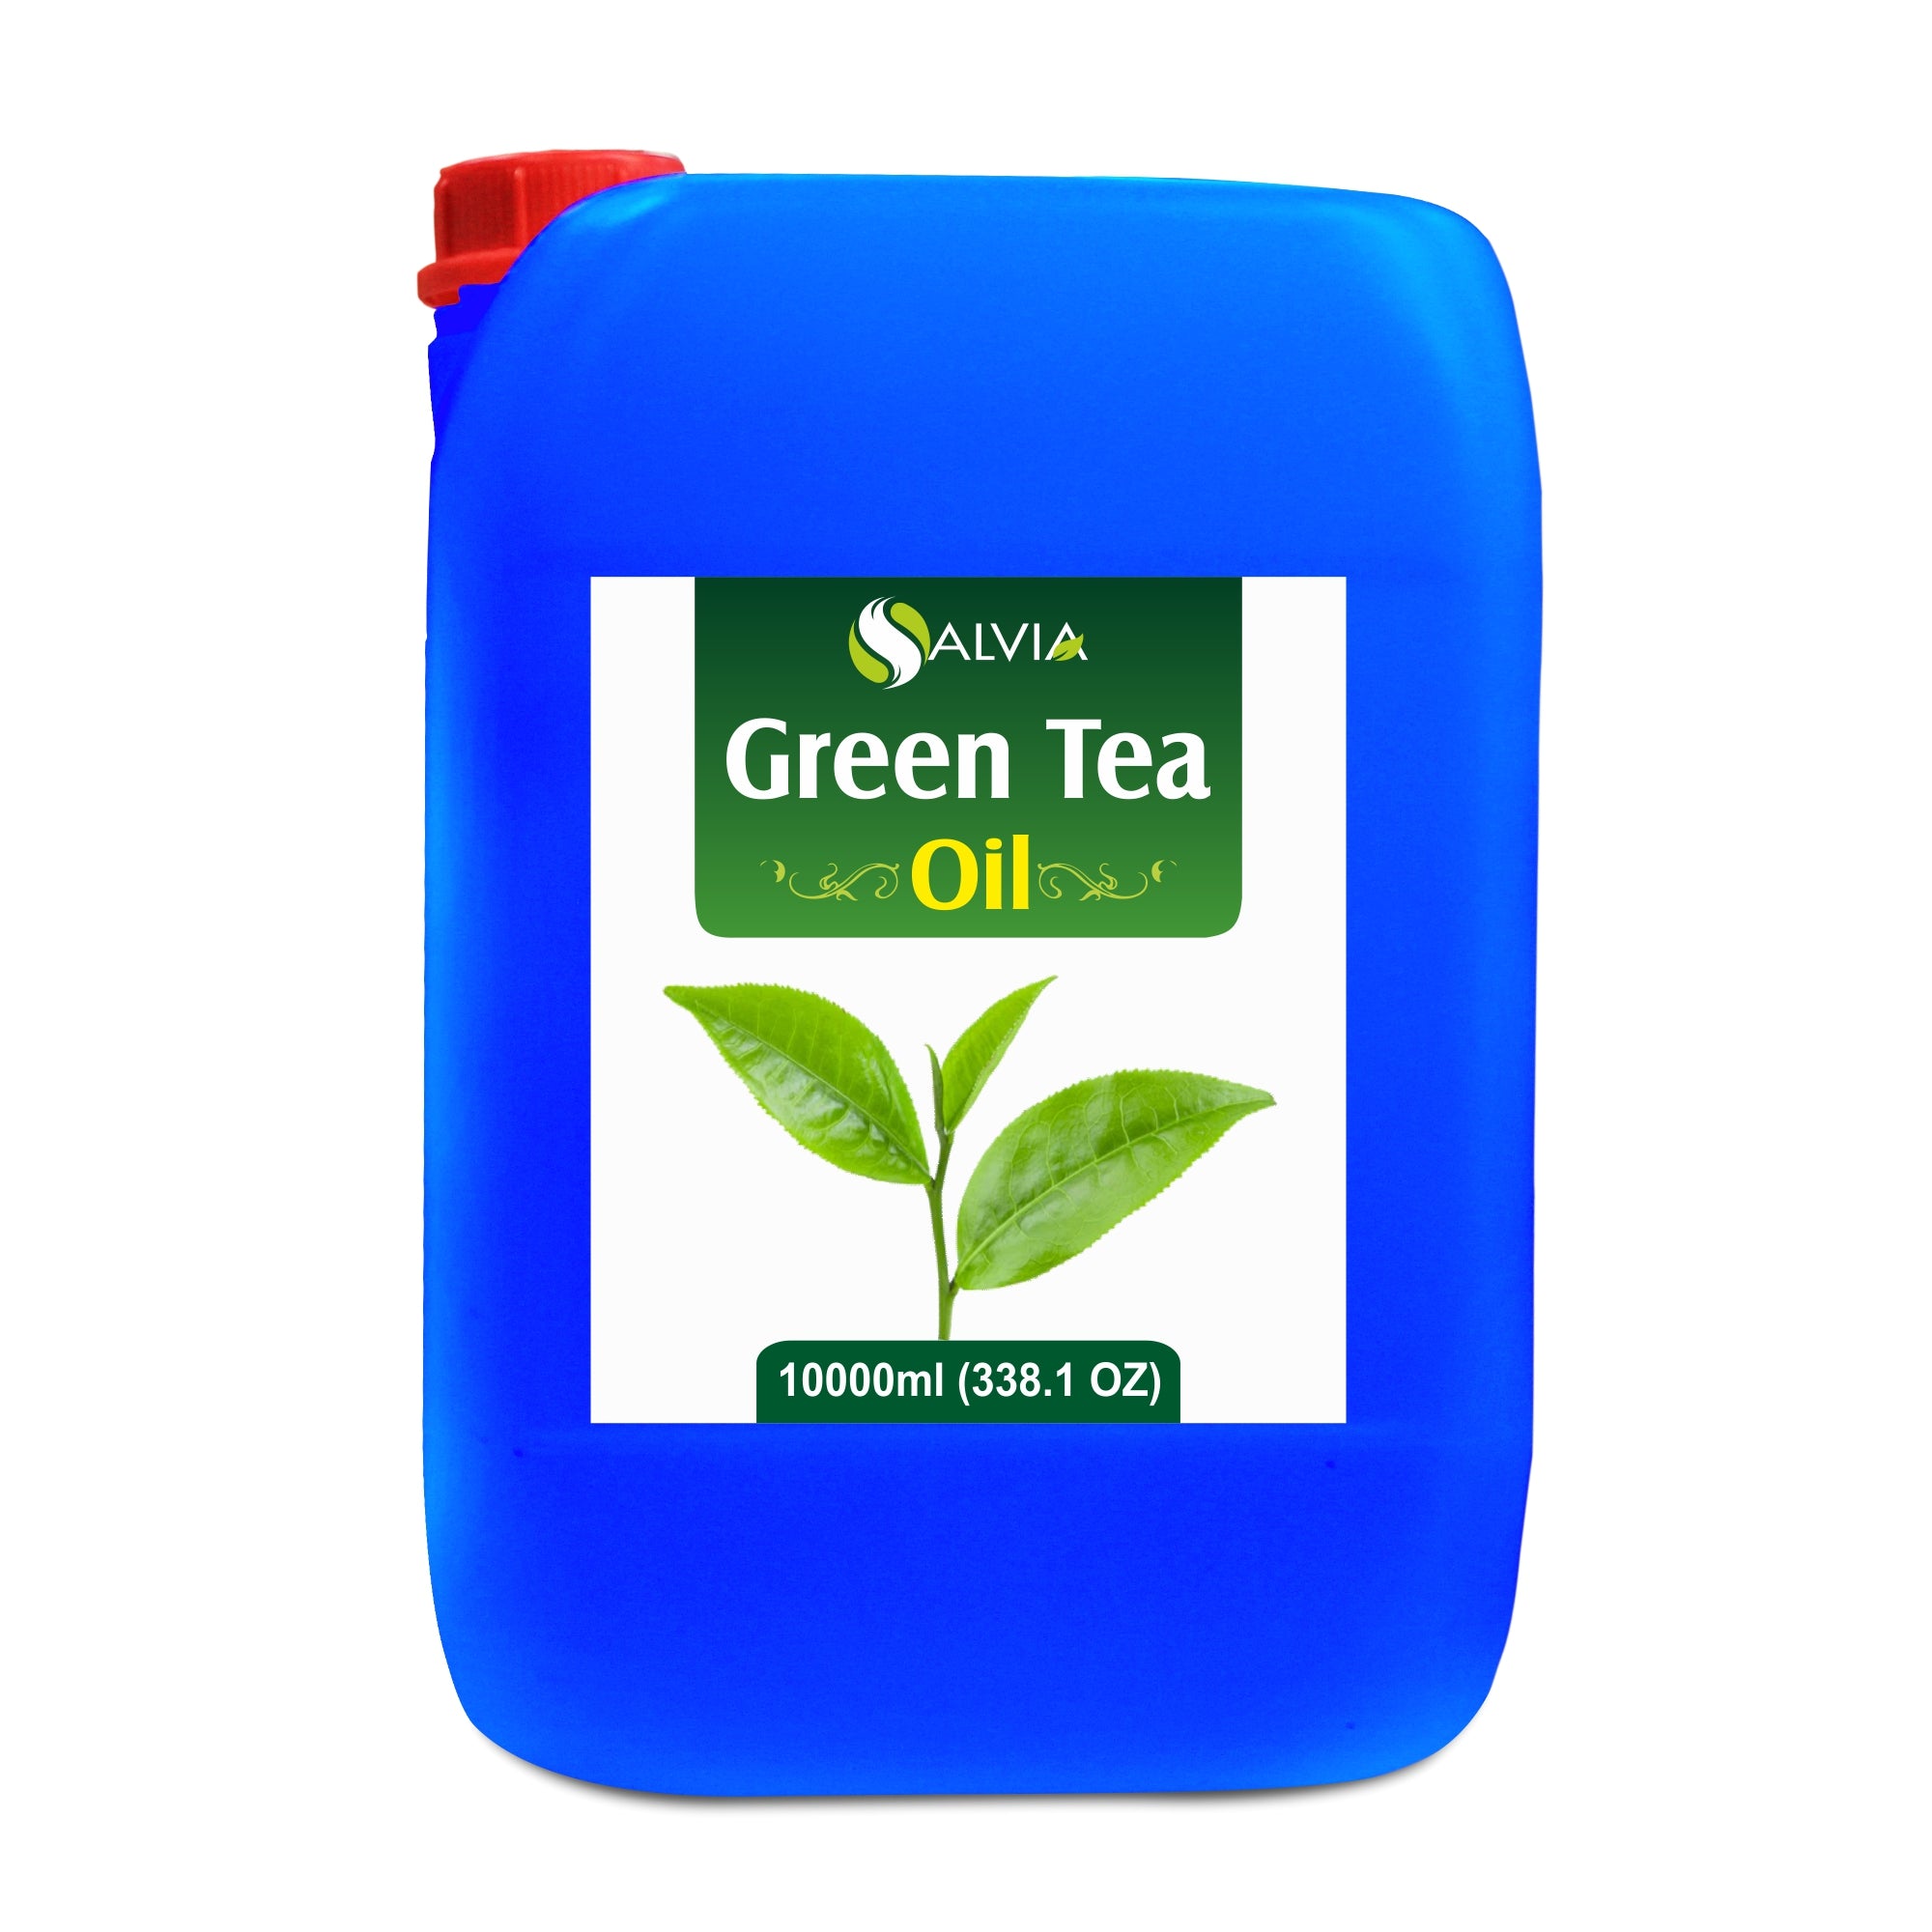 Salvia Natural Carrier Oils 10kg Green Tea Oil